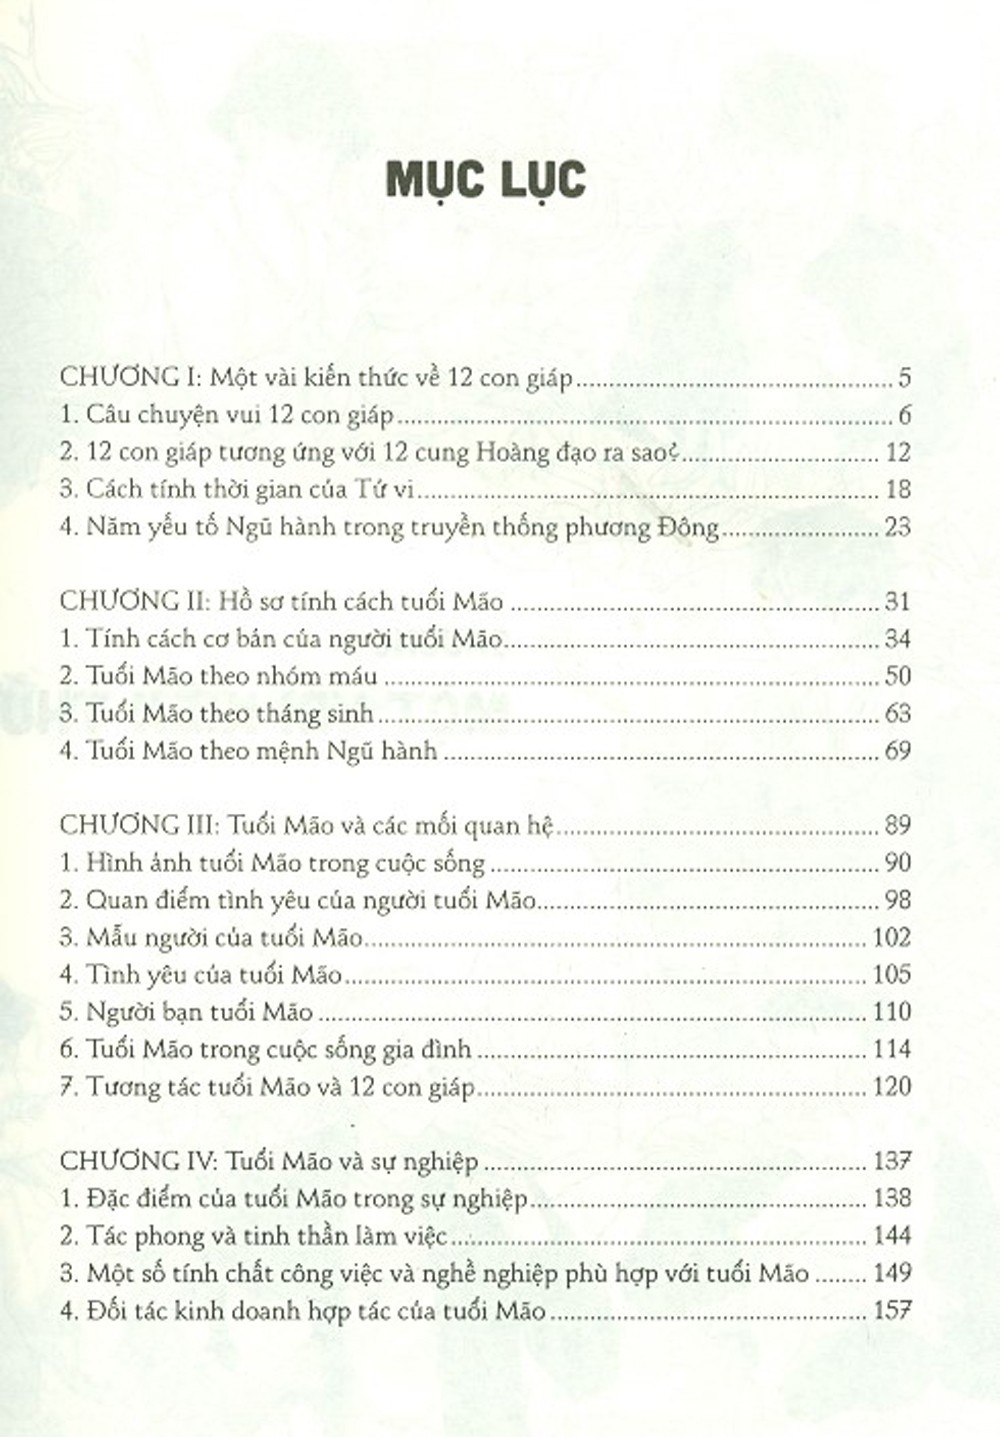 Hồ Sơ Tính Cách 12 Con Giáp - Bí Mật Tuổi Mão - Tặng Kèm Postcard PDF